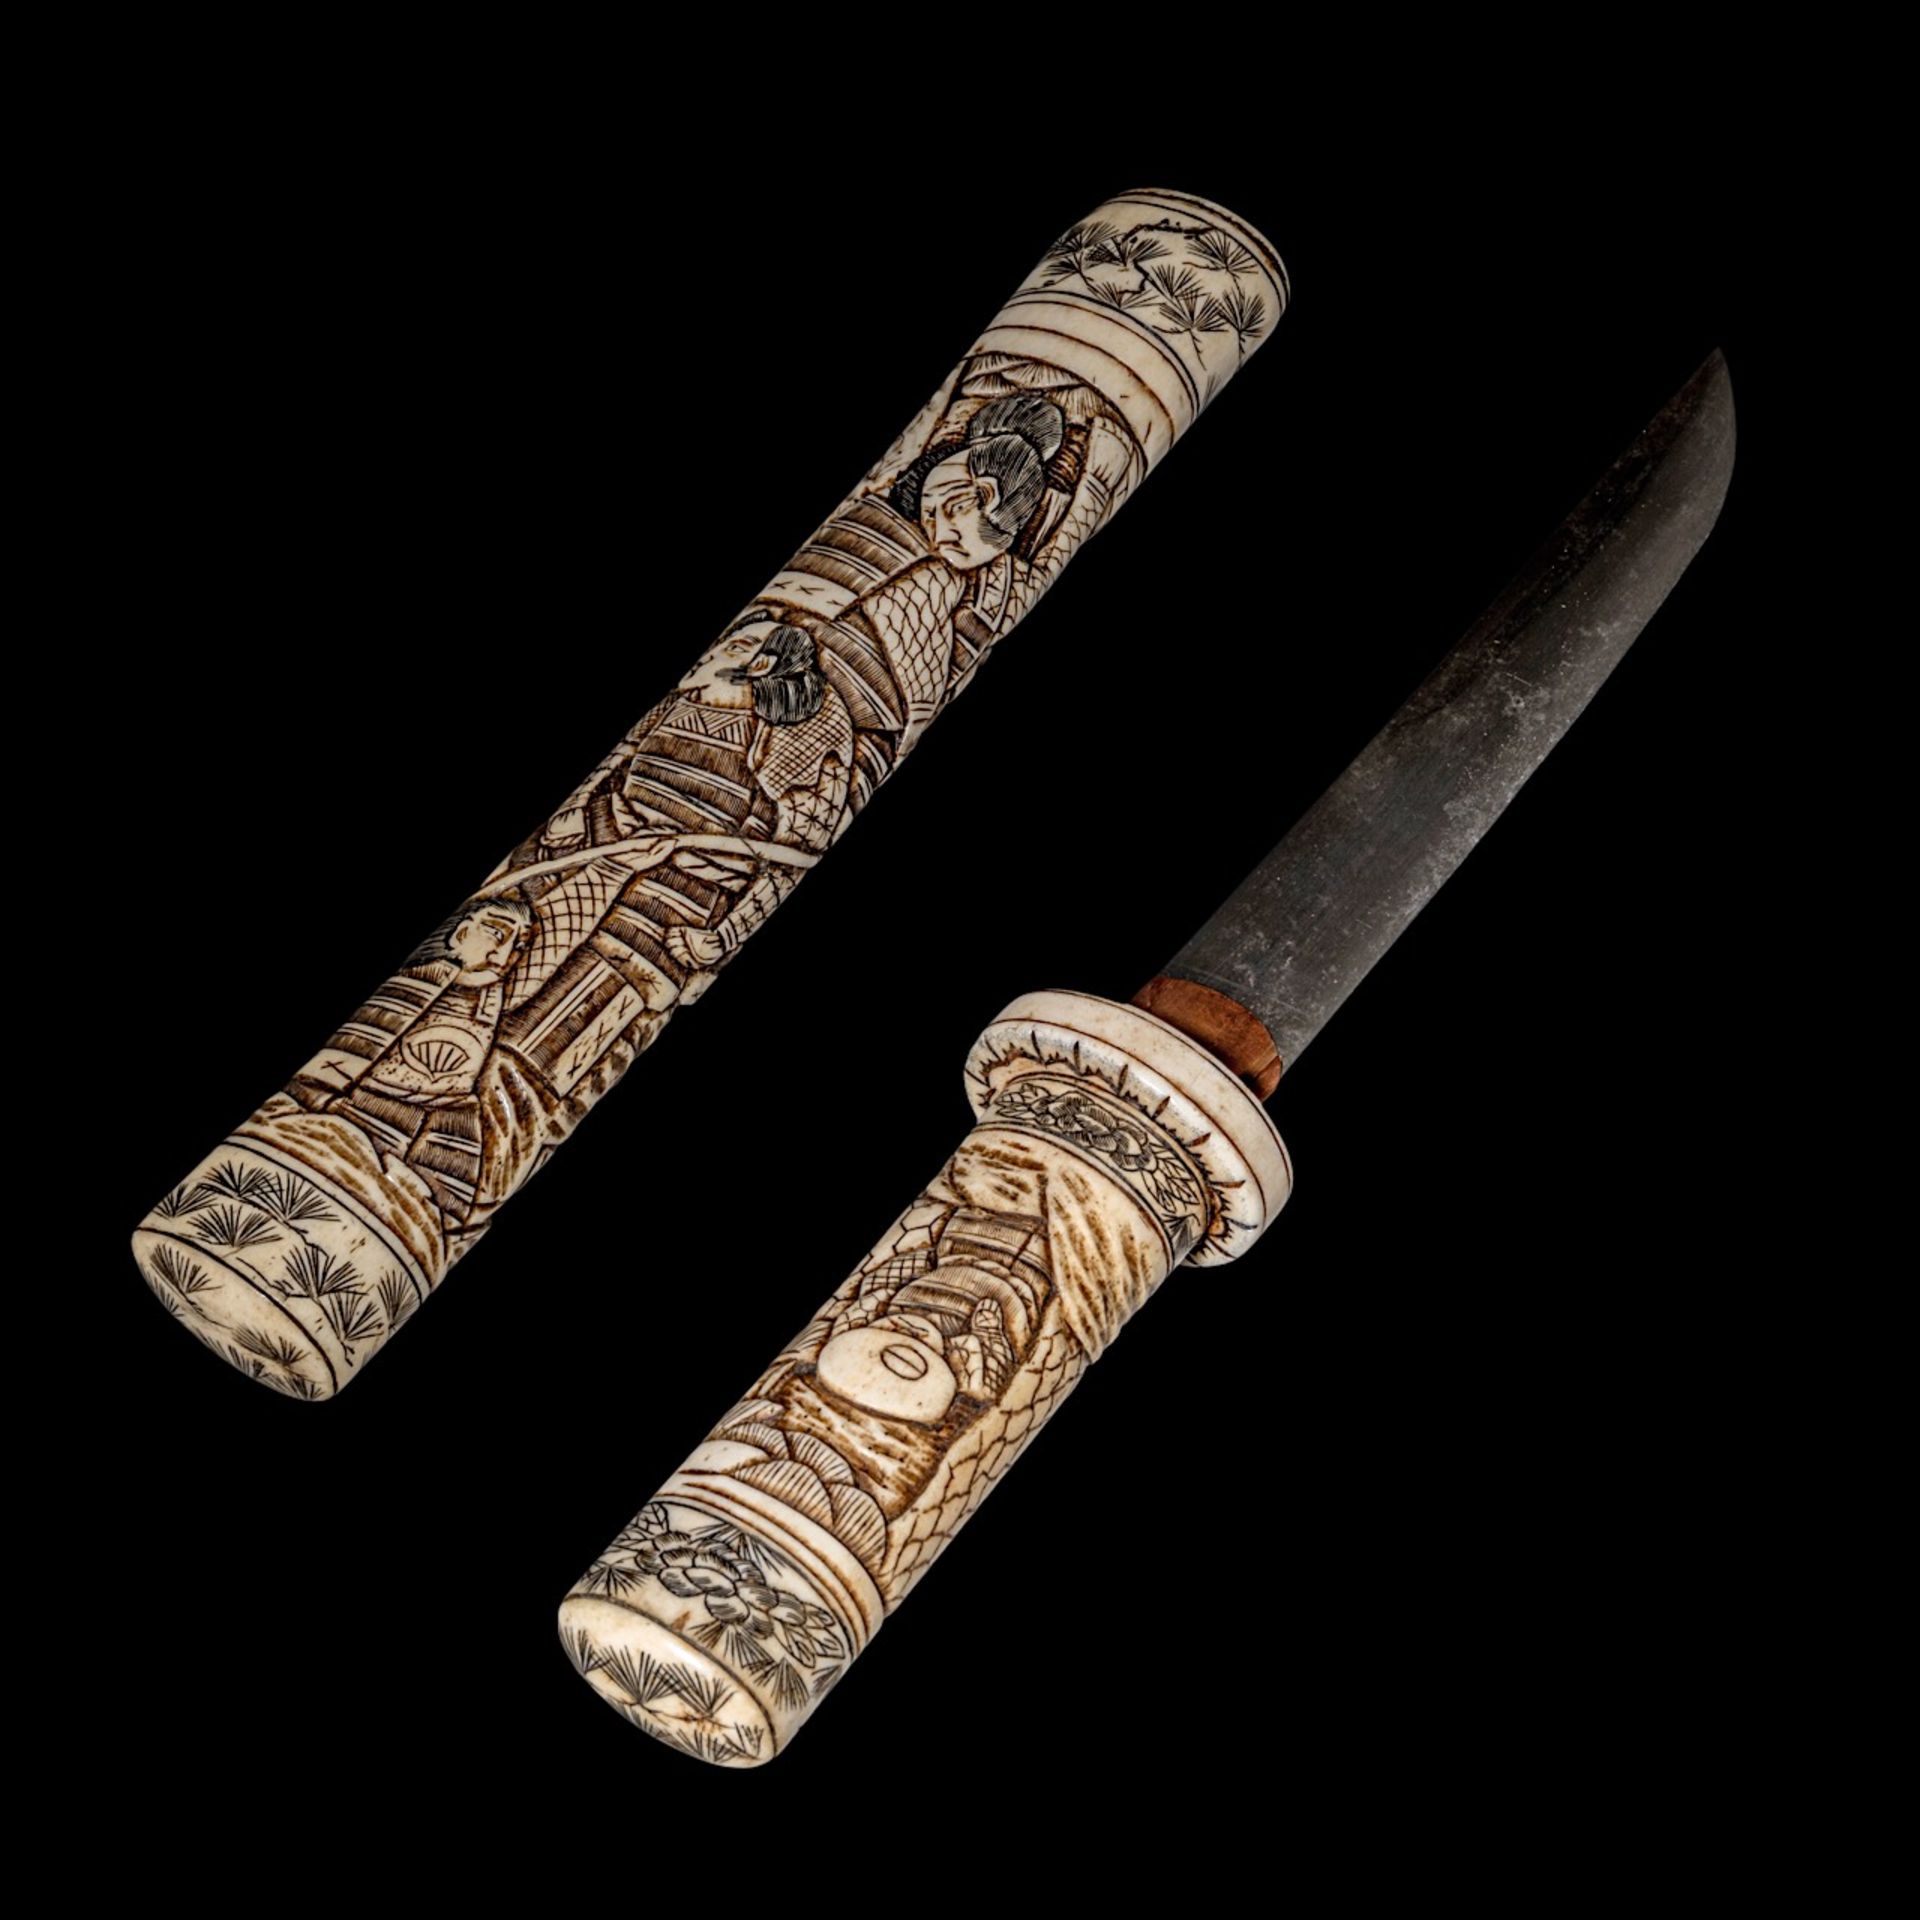 A Japanese Meiji/Taisho period (1868-1926) bone tanto dagger, L 34,7 - weight 331g